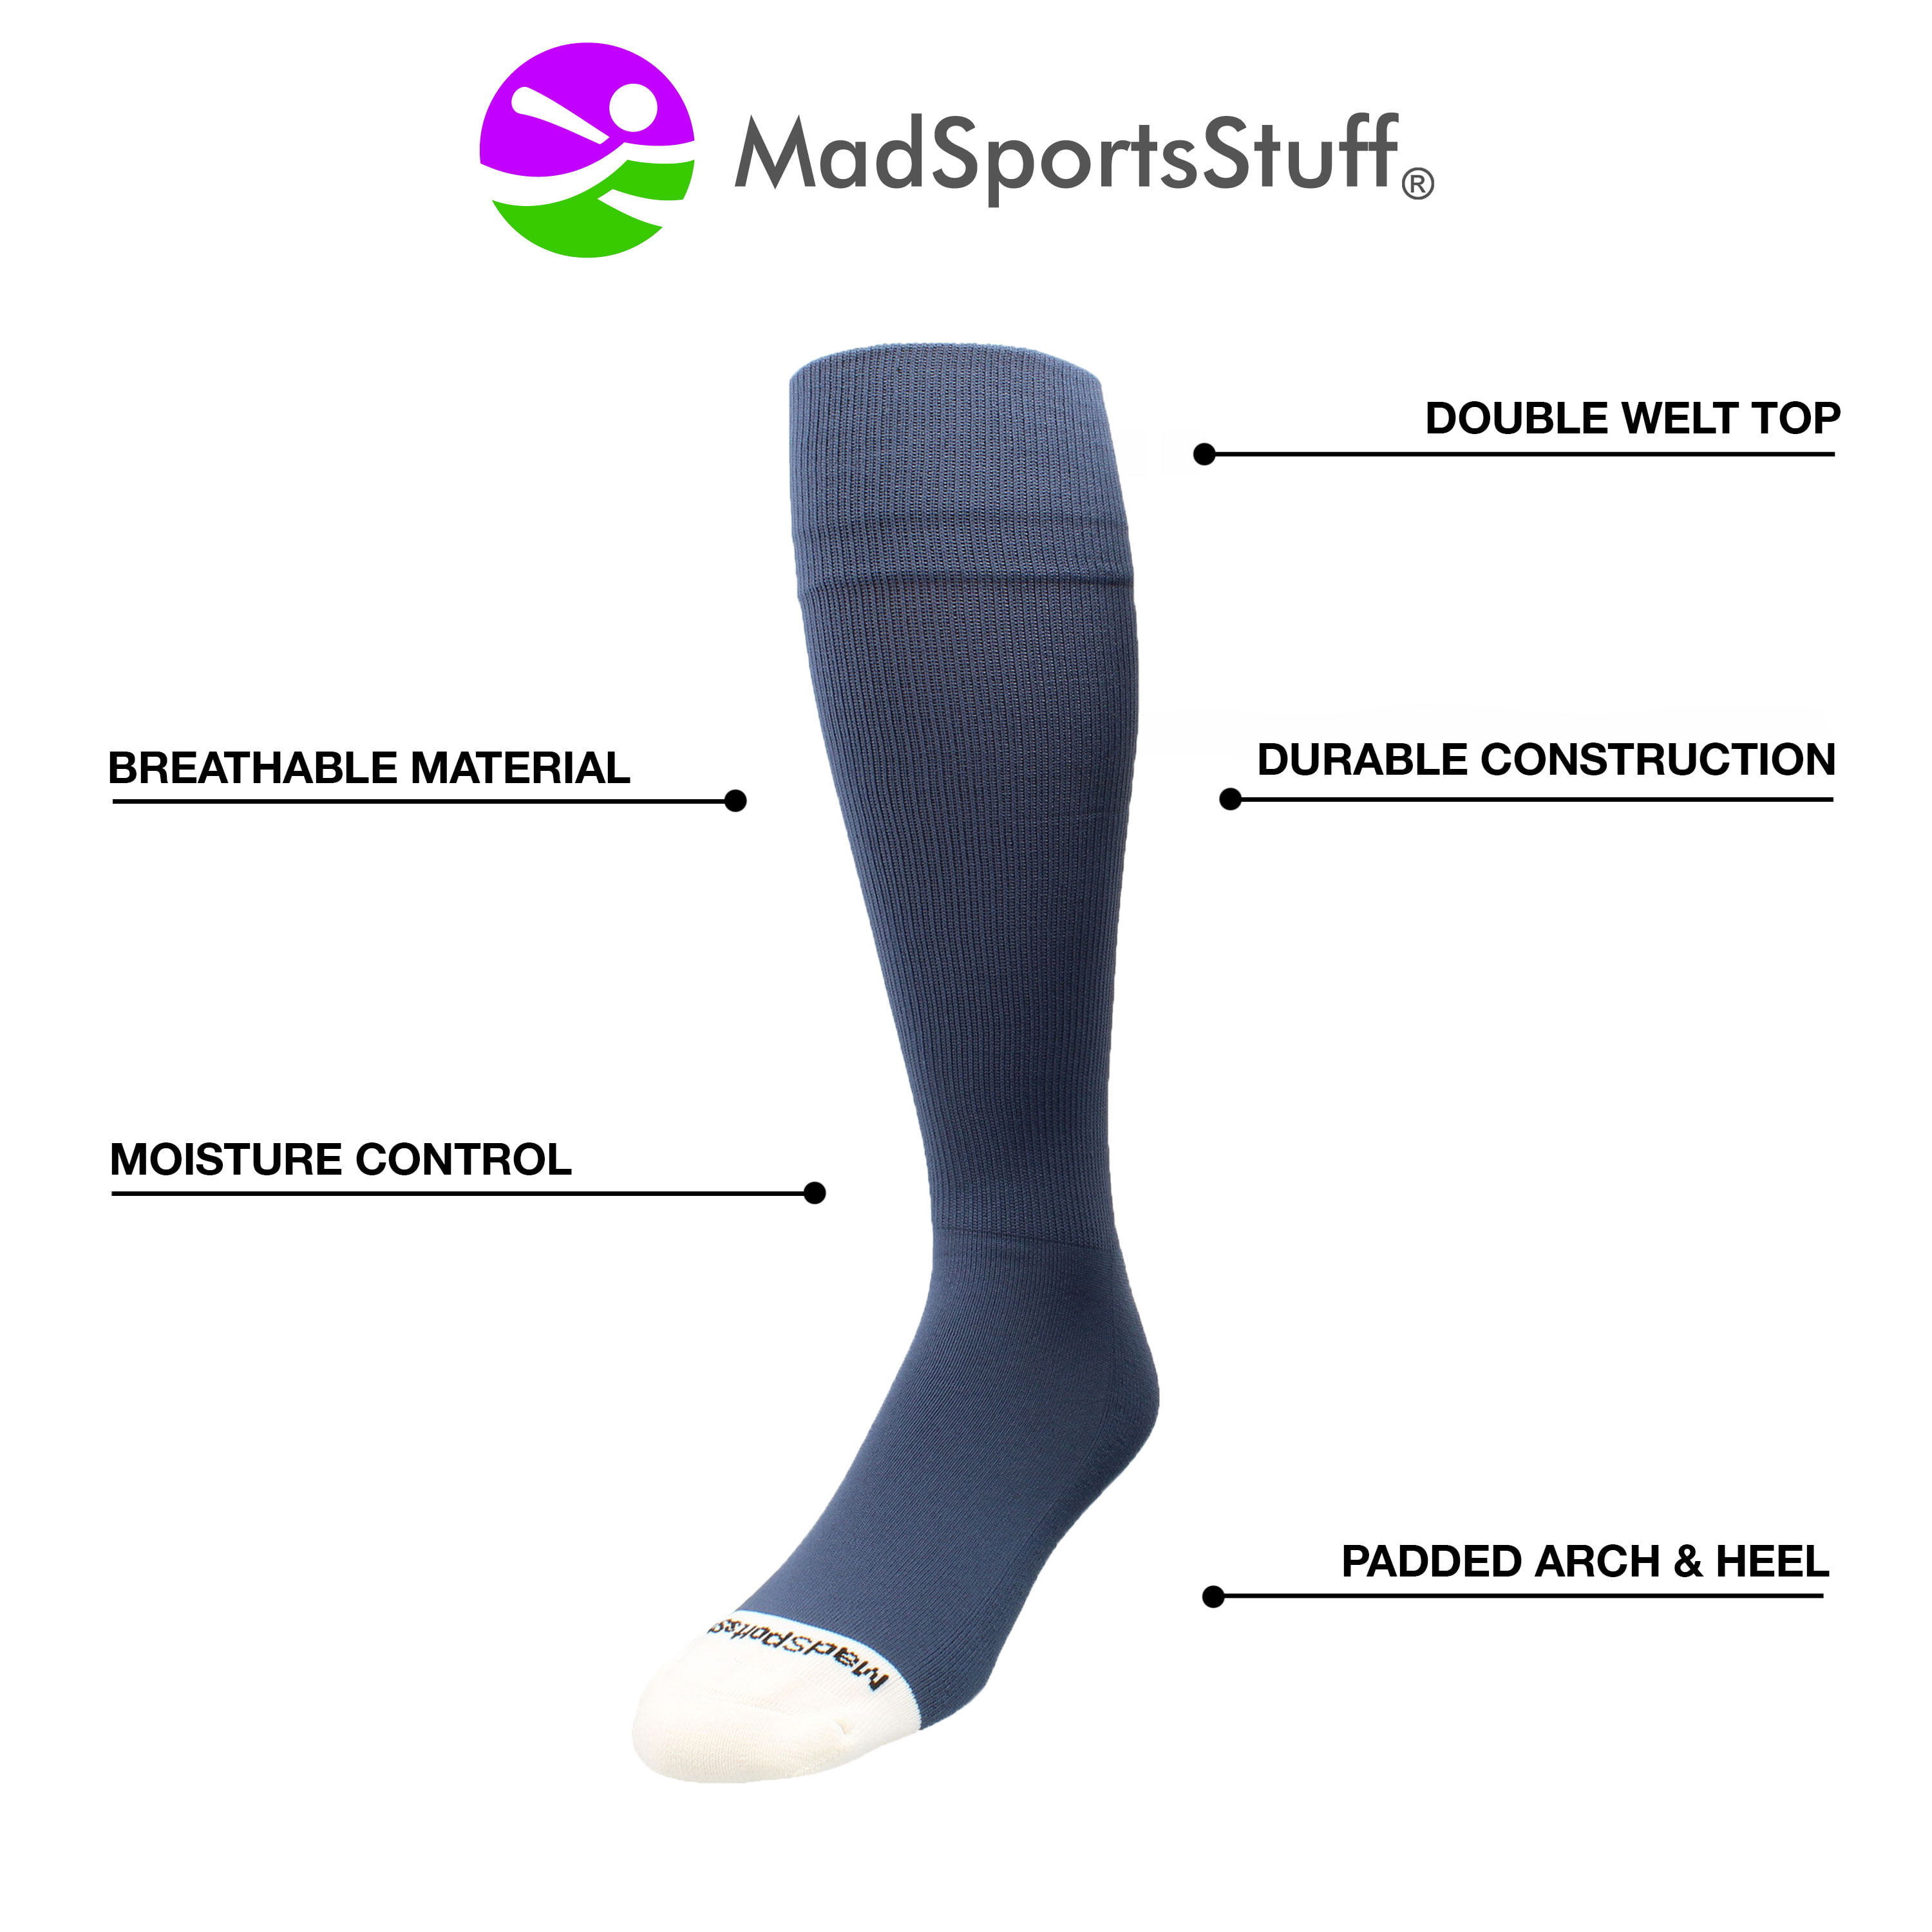 MadSportsStuff Pro Line Over The Calf Softball Socks 